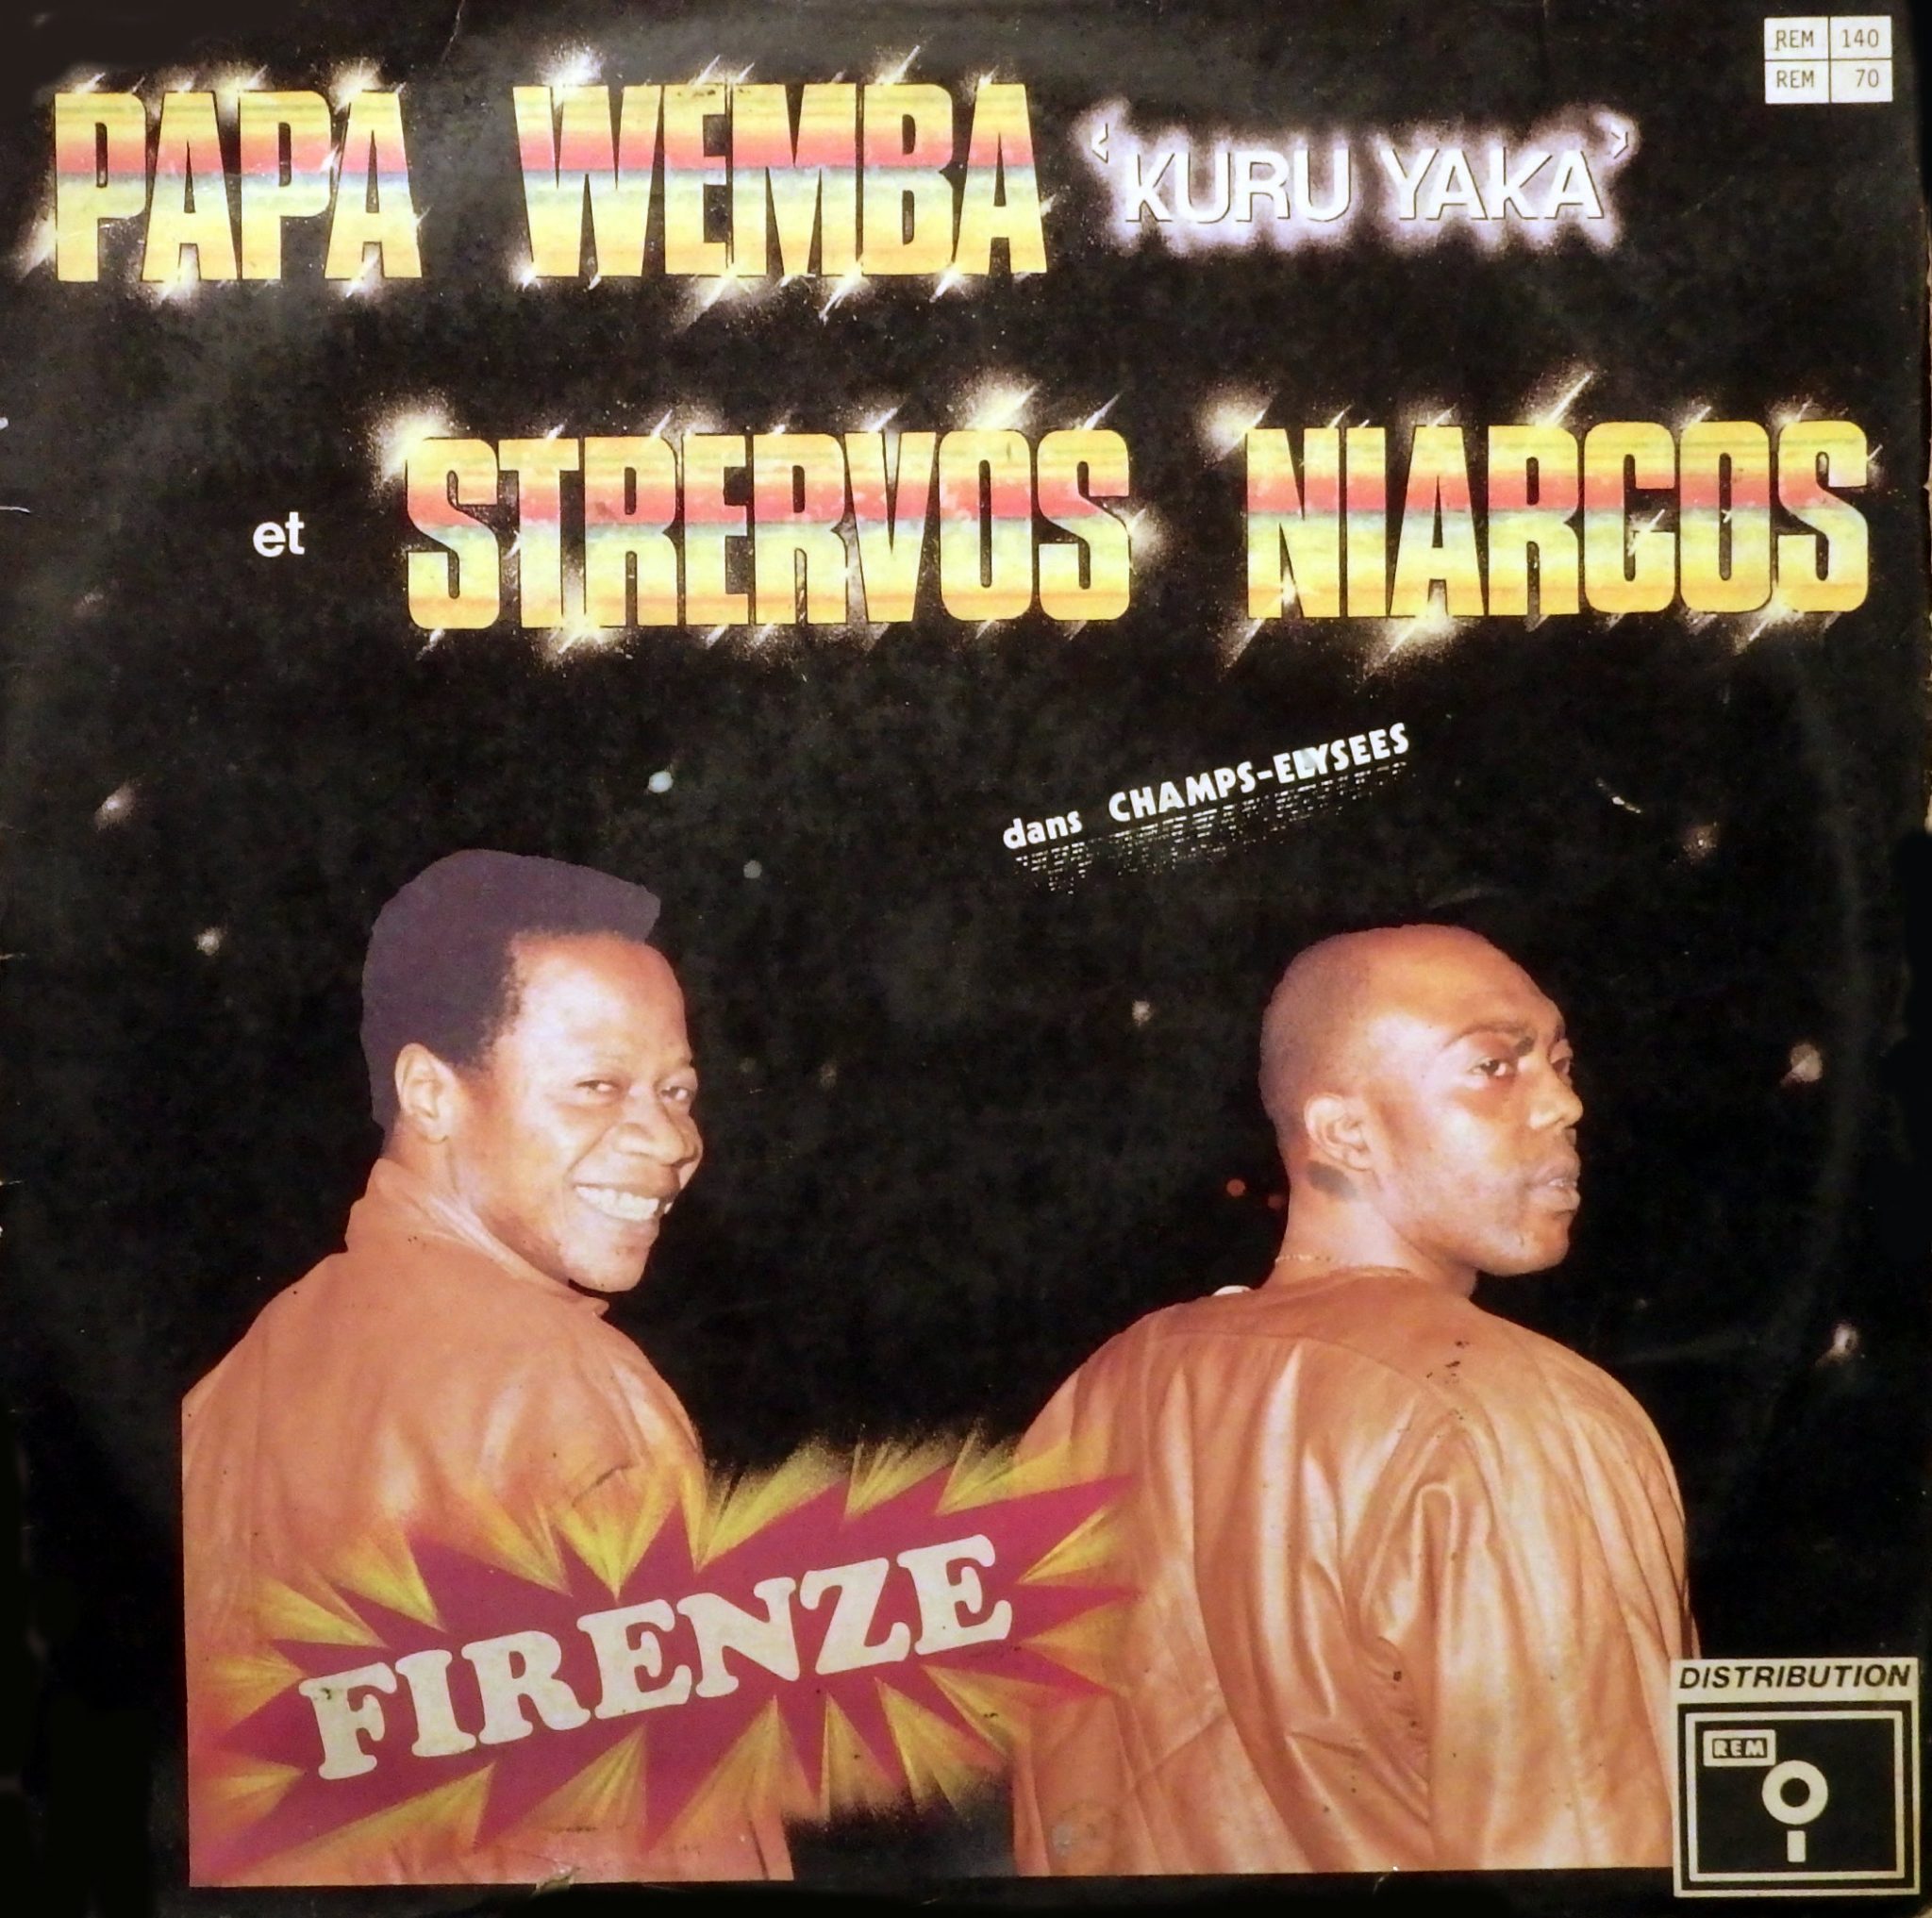 Papa Wemba “Kuru Yaka” et Strervos Niarcos dans ChampsElysées, Firenze